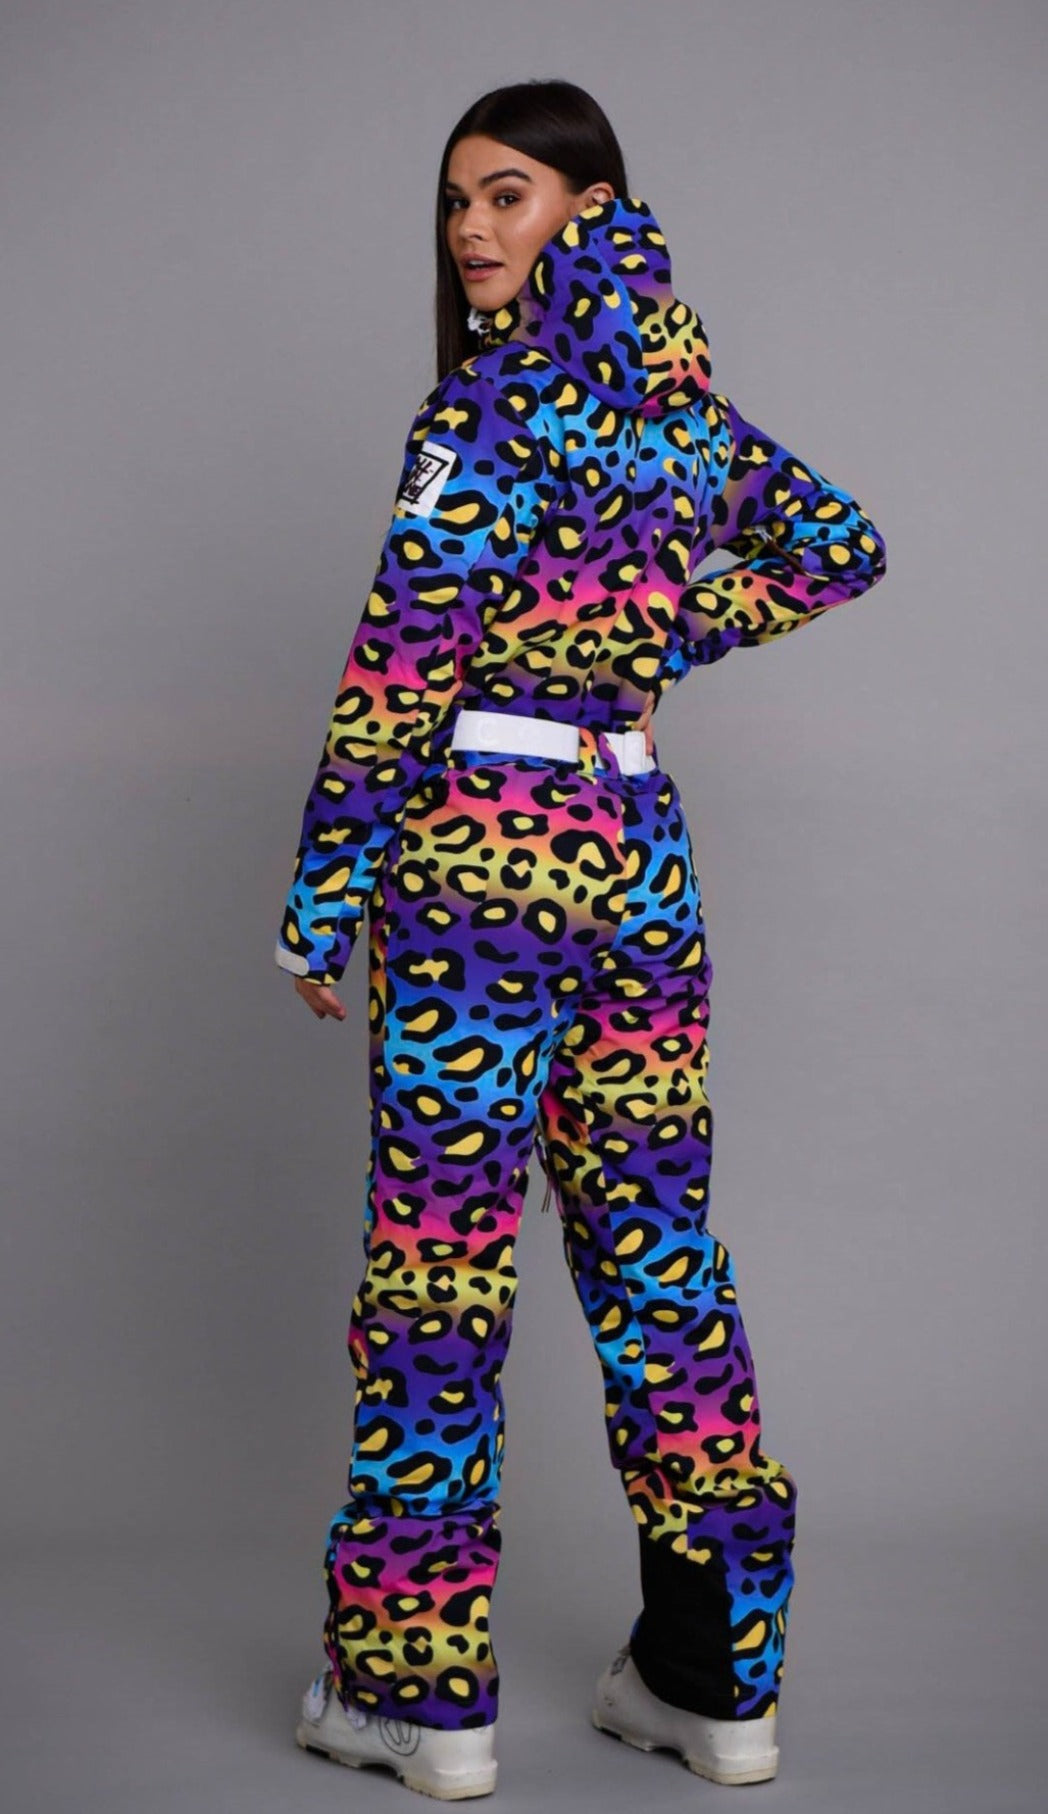 oosc women's leopard print ski suit